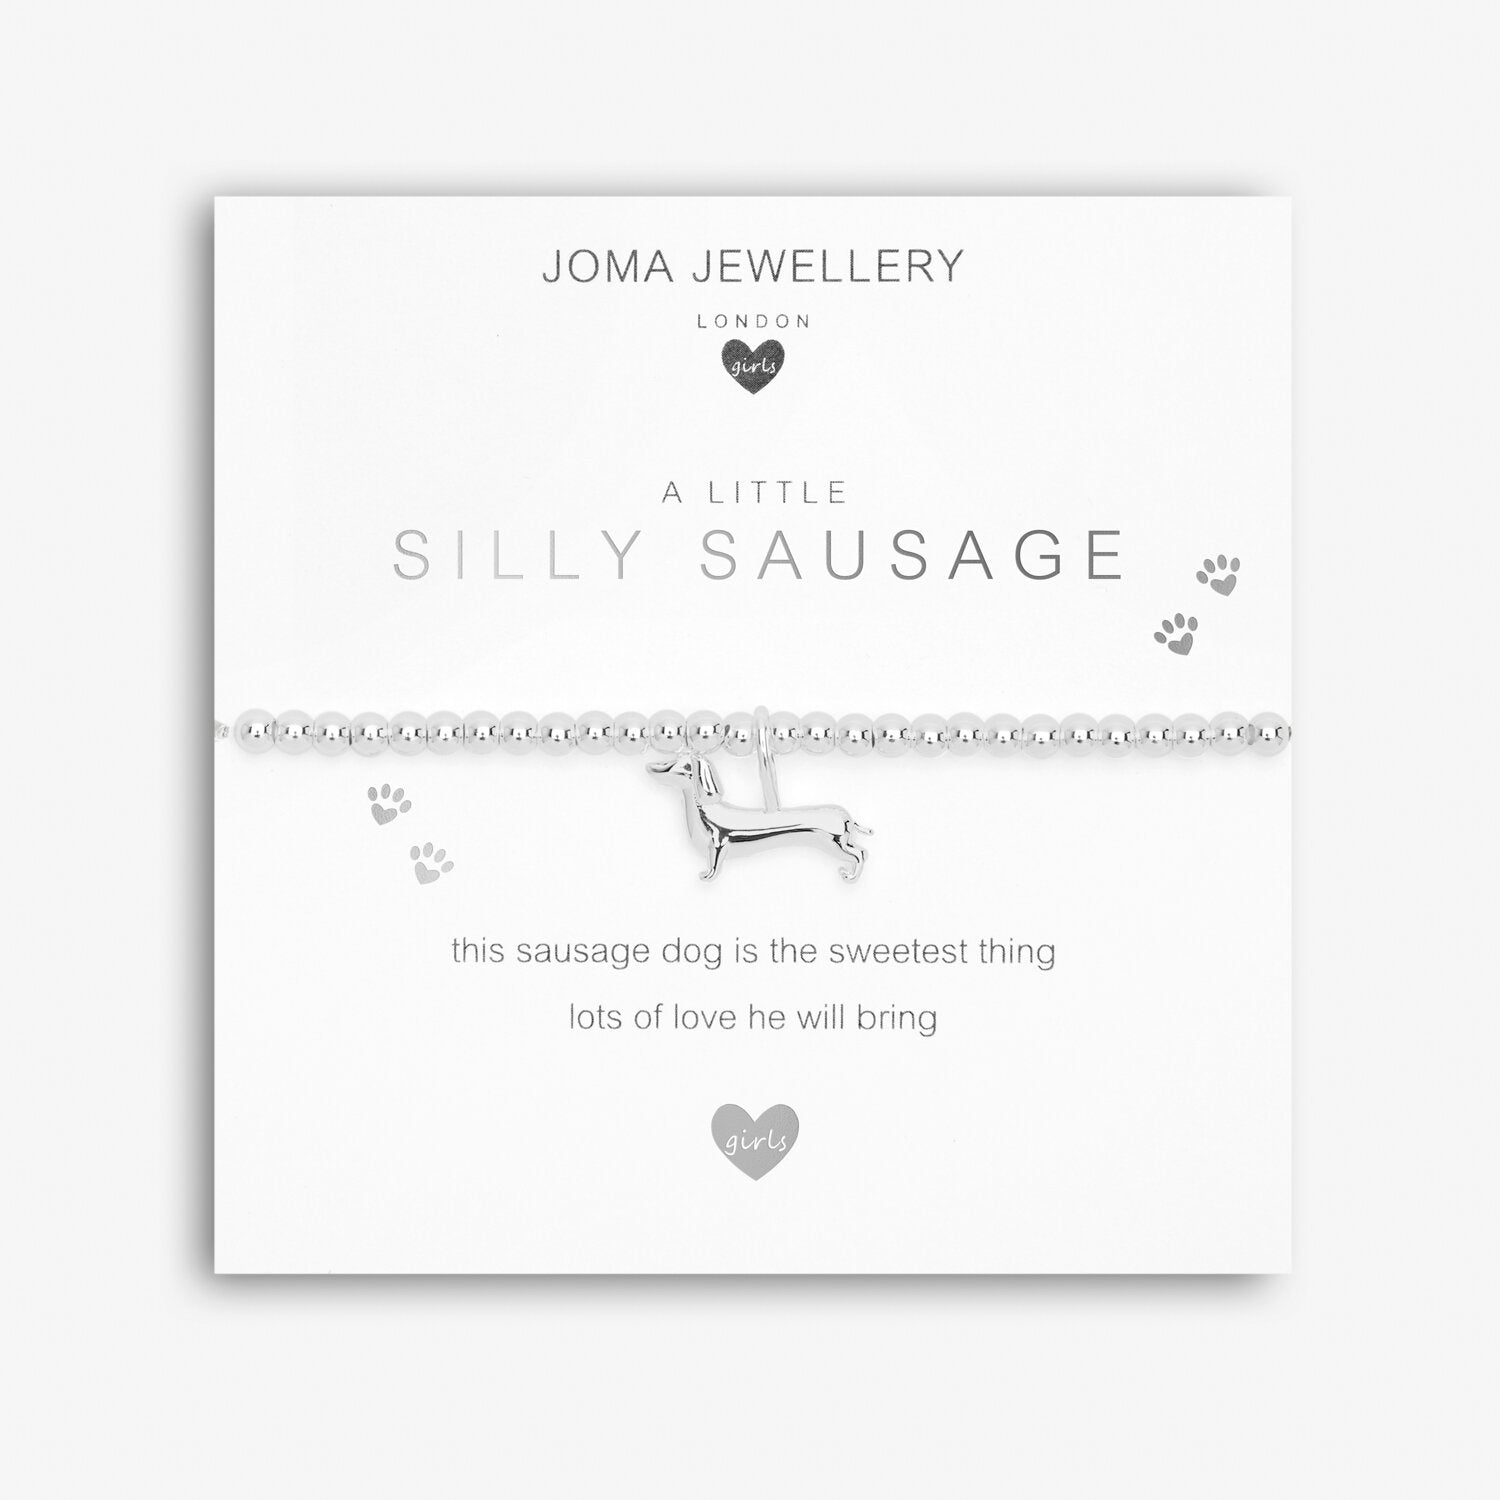 A Little Children's - Silly Sausage Bracelet - Joma Jewellery